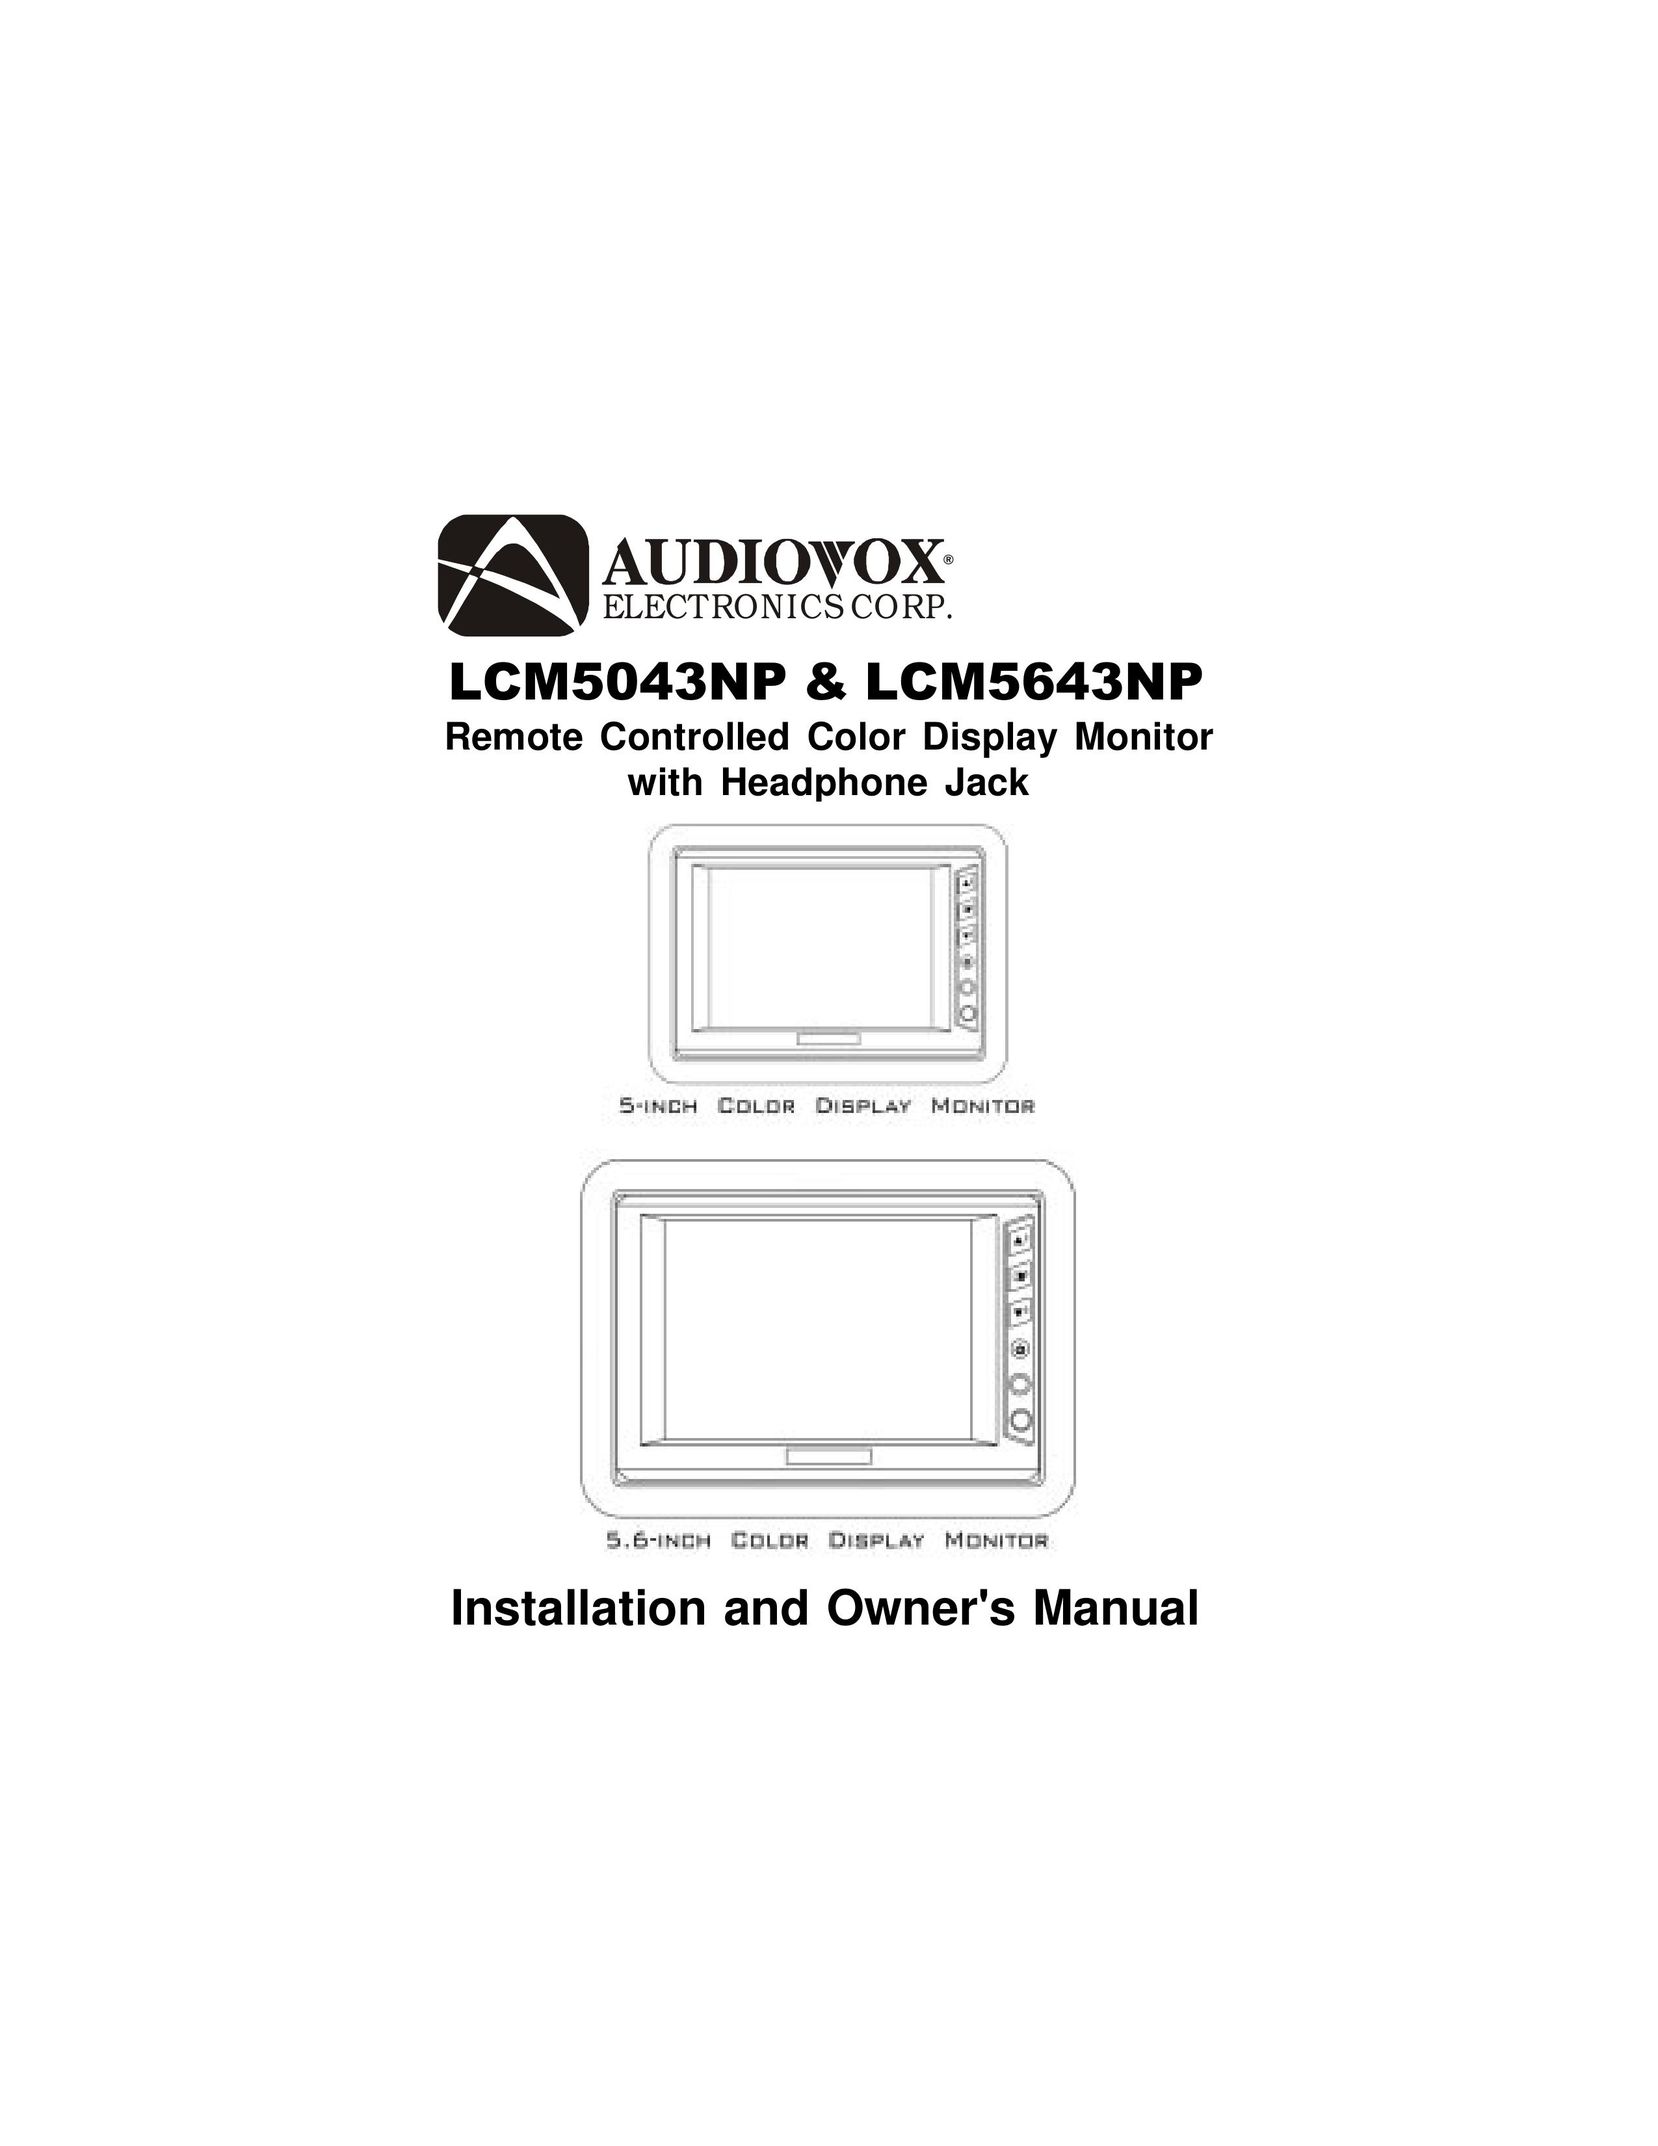 Audiovox LCM5043NP Computer Monitor User Manual